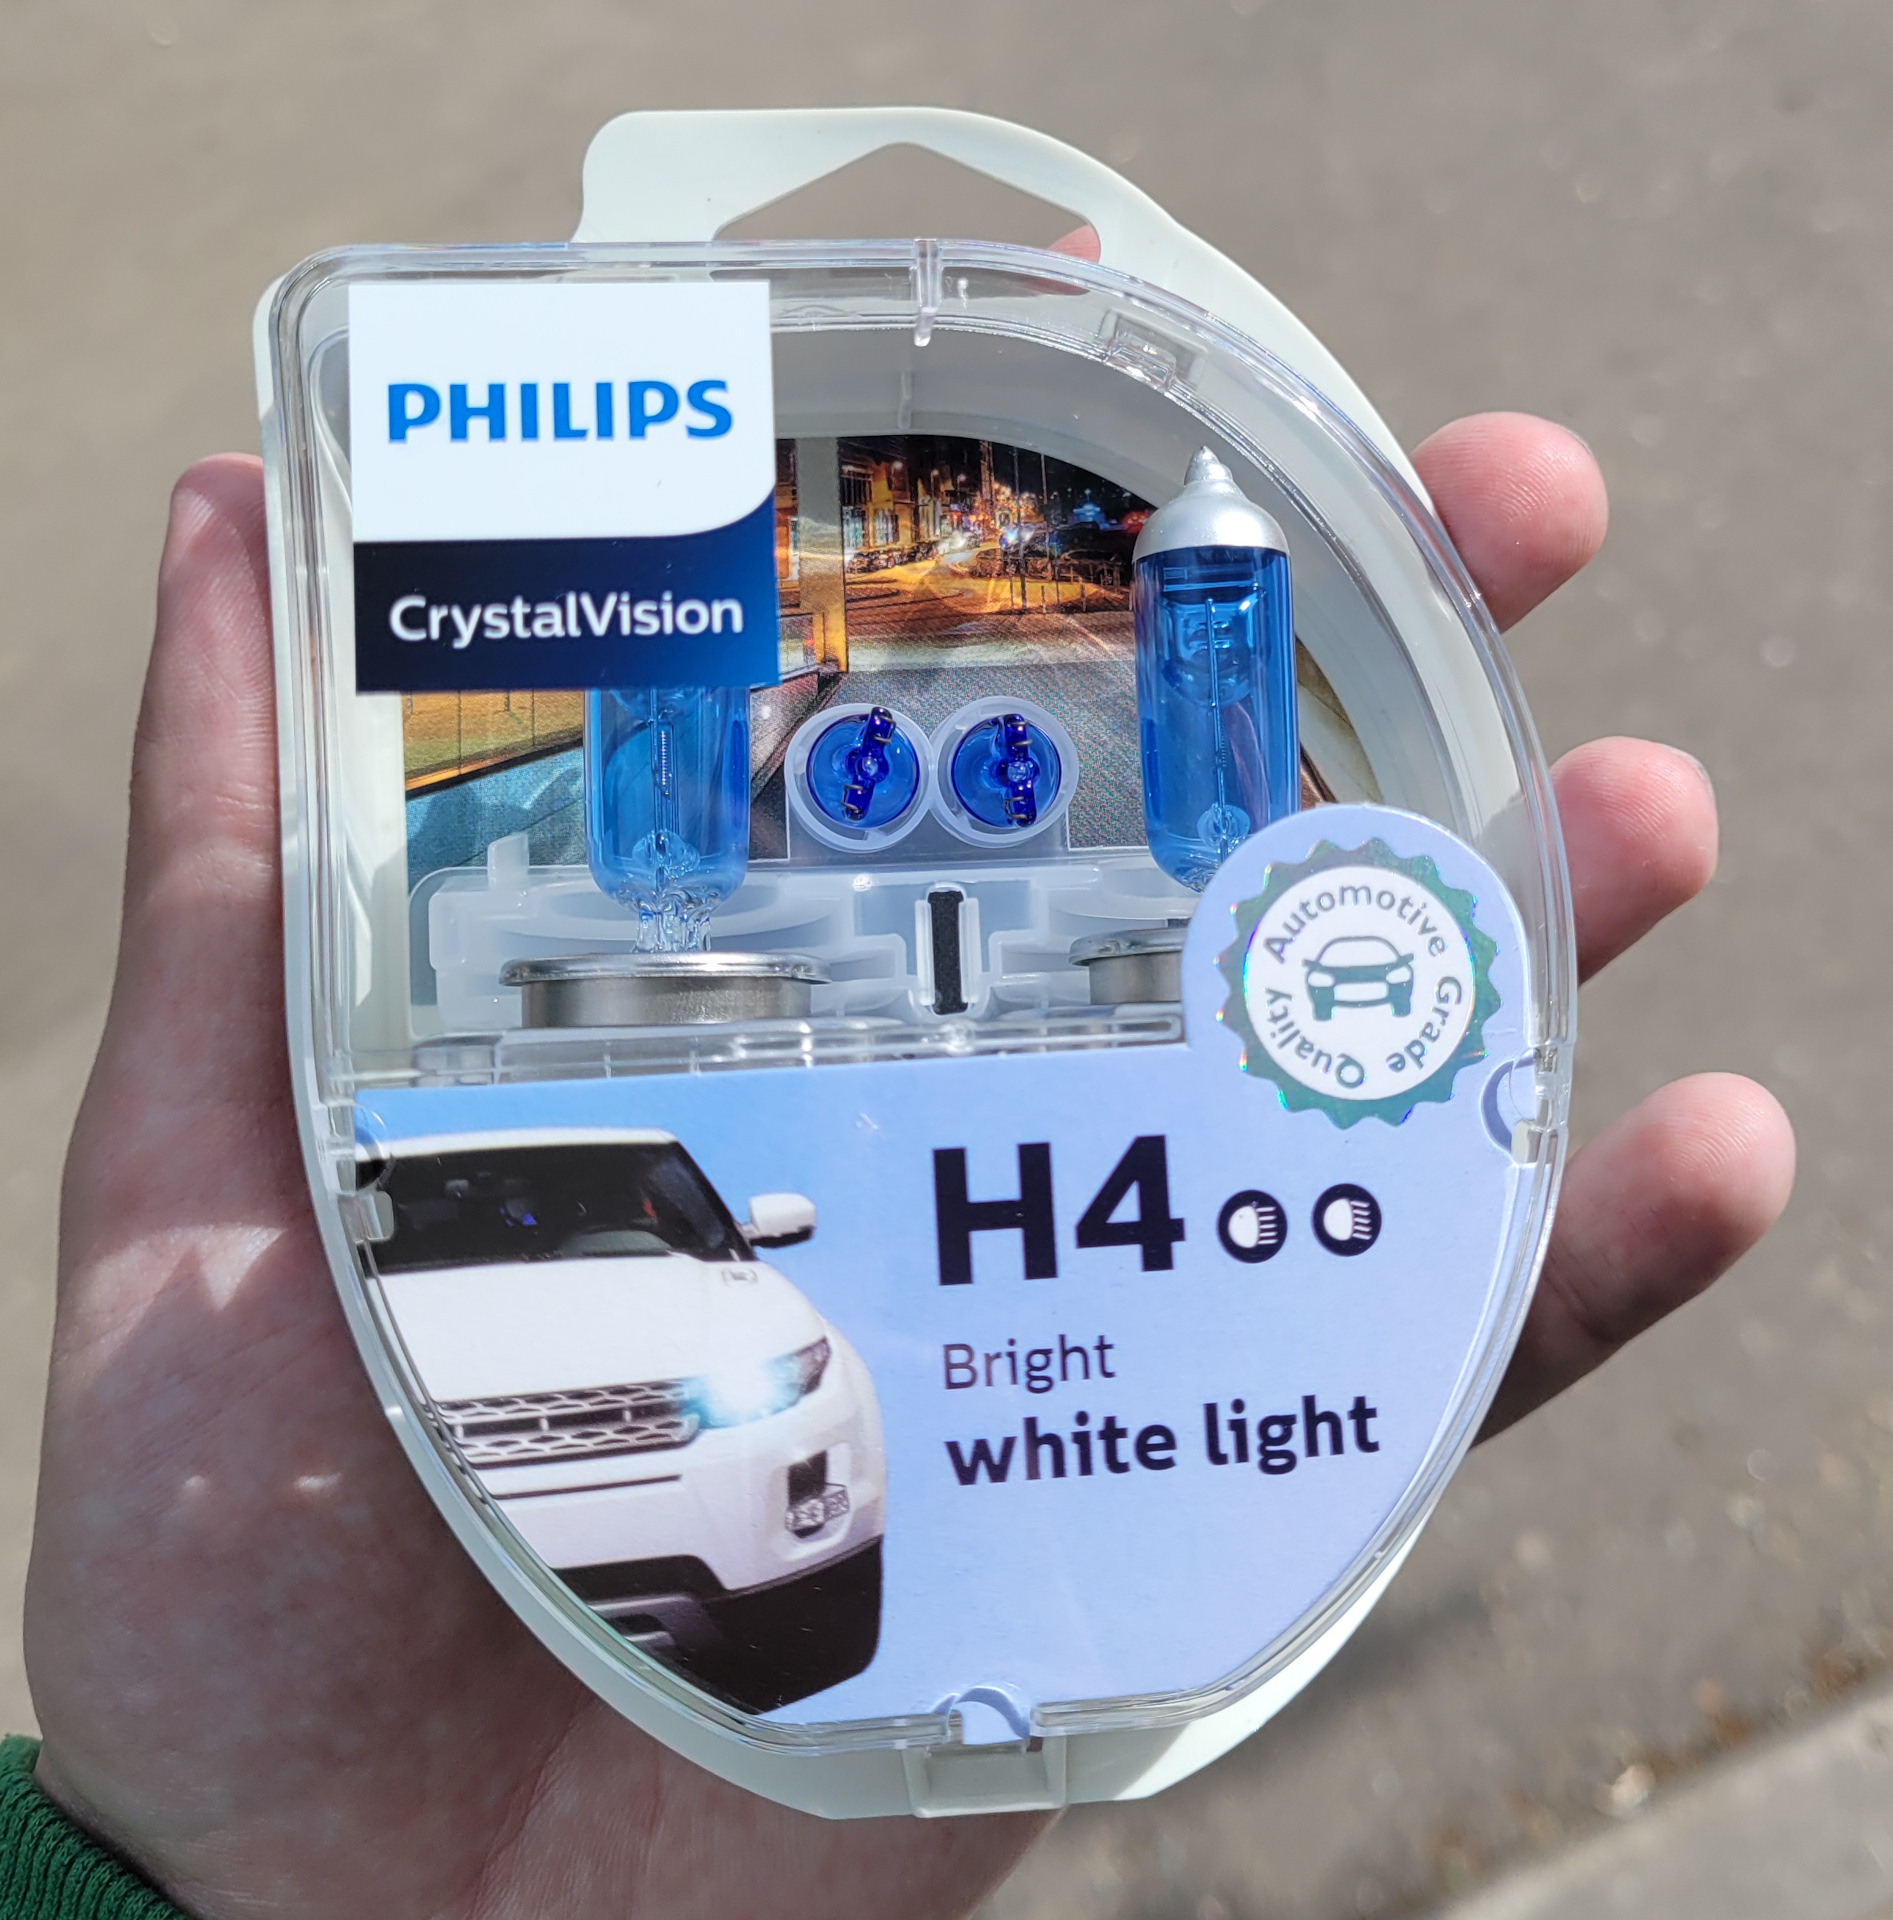 Philips crystal